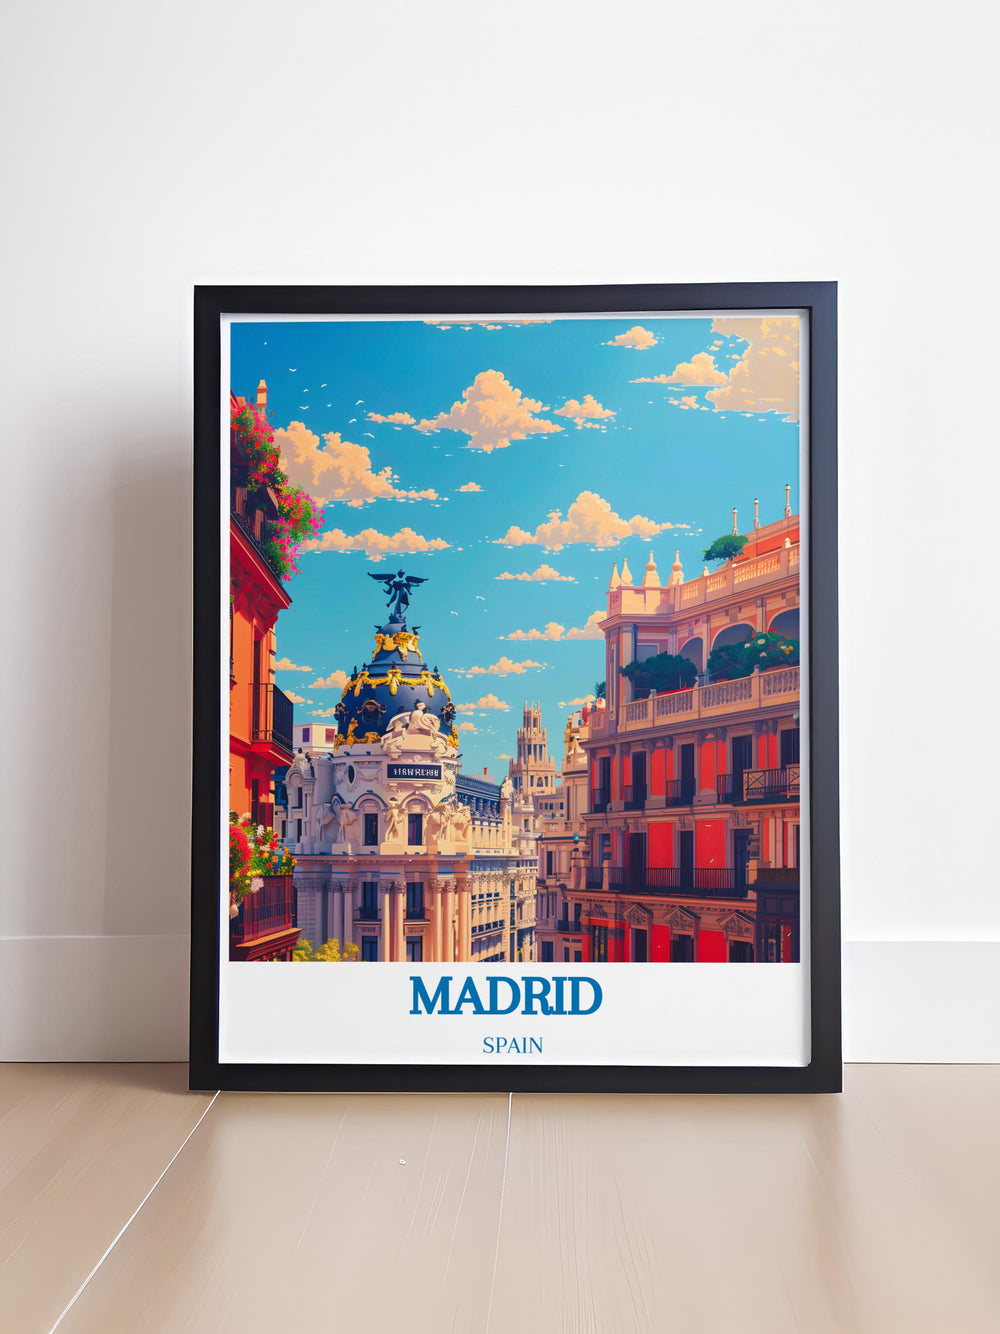 Framed art of Spains diverse landscapes, ideal for adding cultural depth to any room.